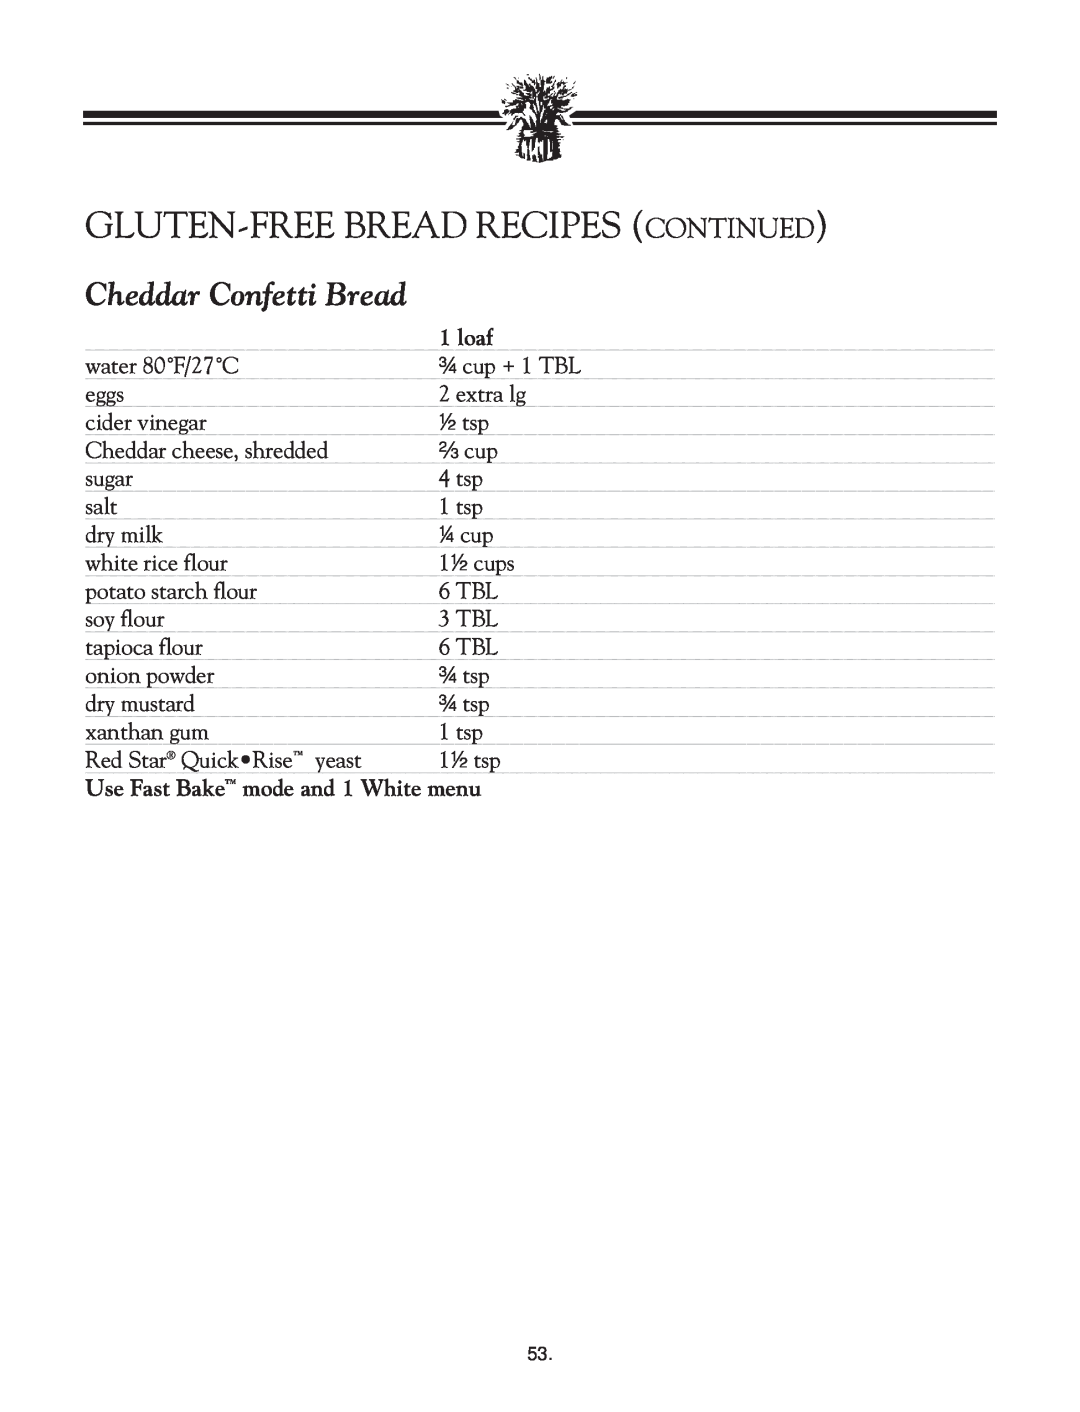 Breadman TR2828G instruction manual Cheddar Confetti Bread, Gluten-Freebread Recipes Continued 